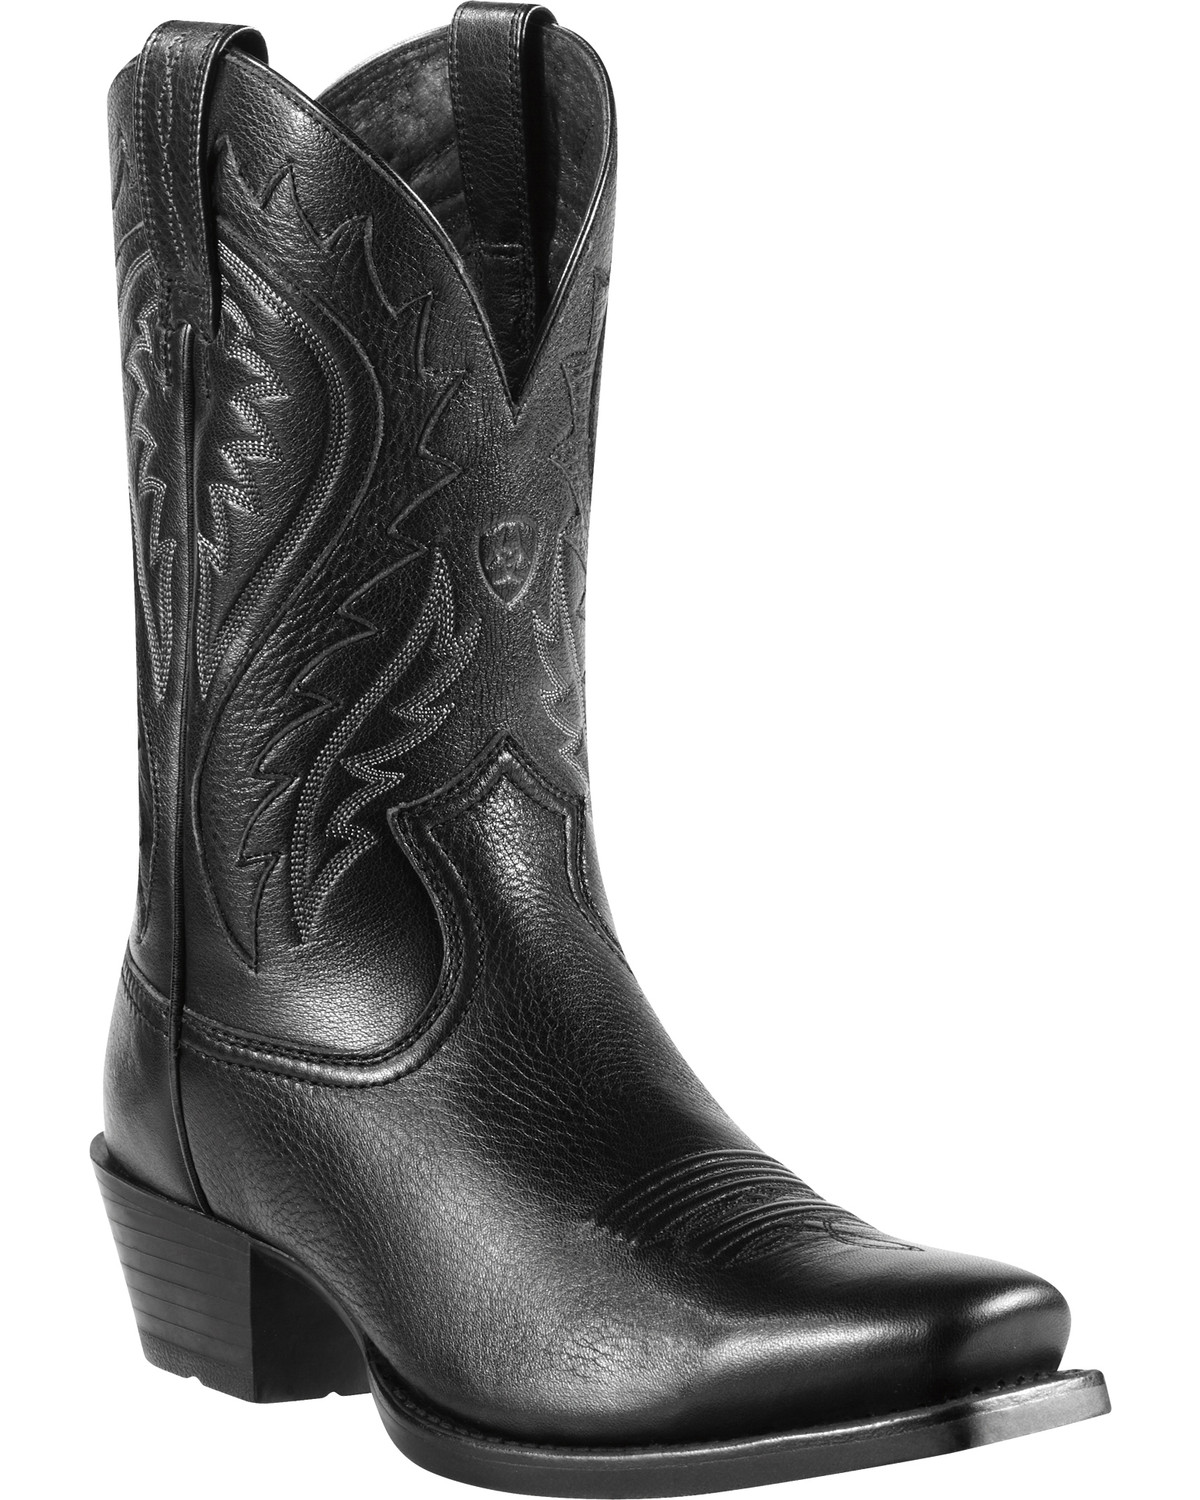 black cowboy boots near me